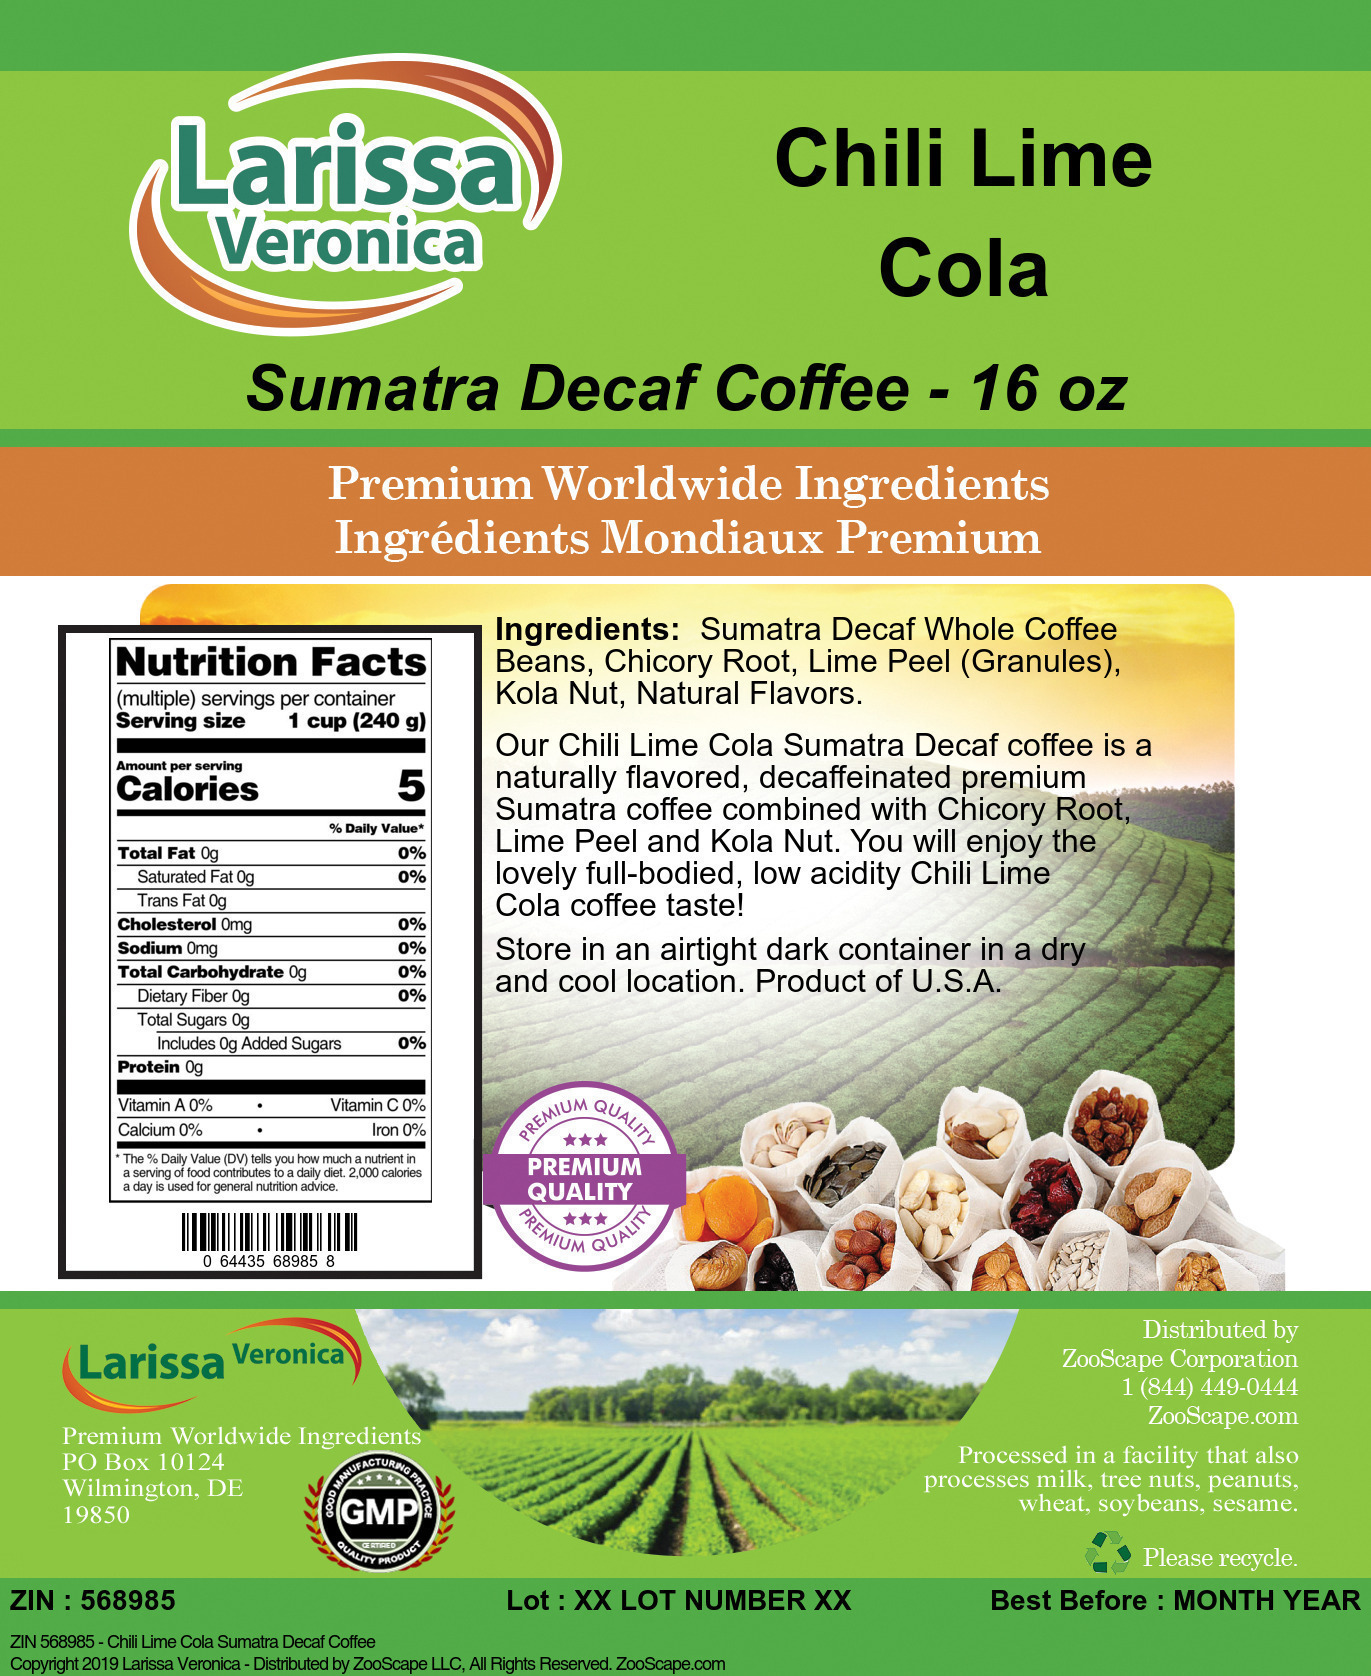 Chili Lime Cola Sumatra Decaf Coffee - Label